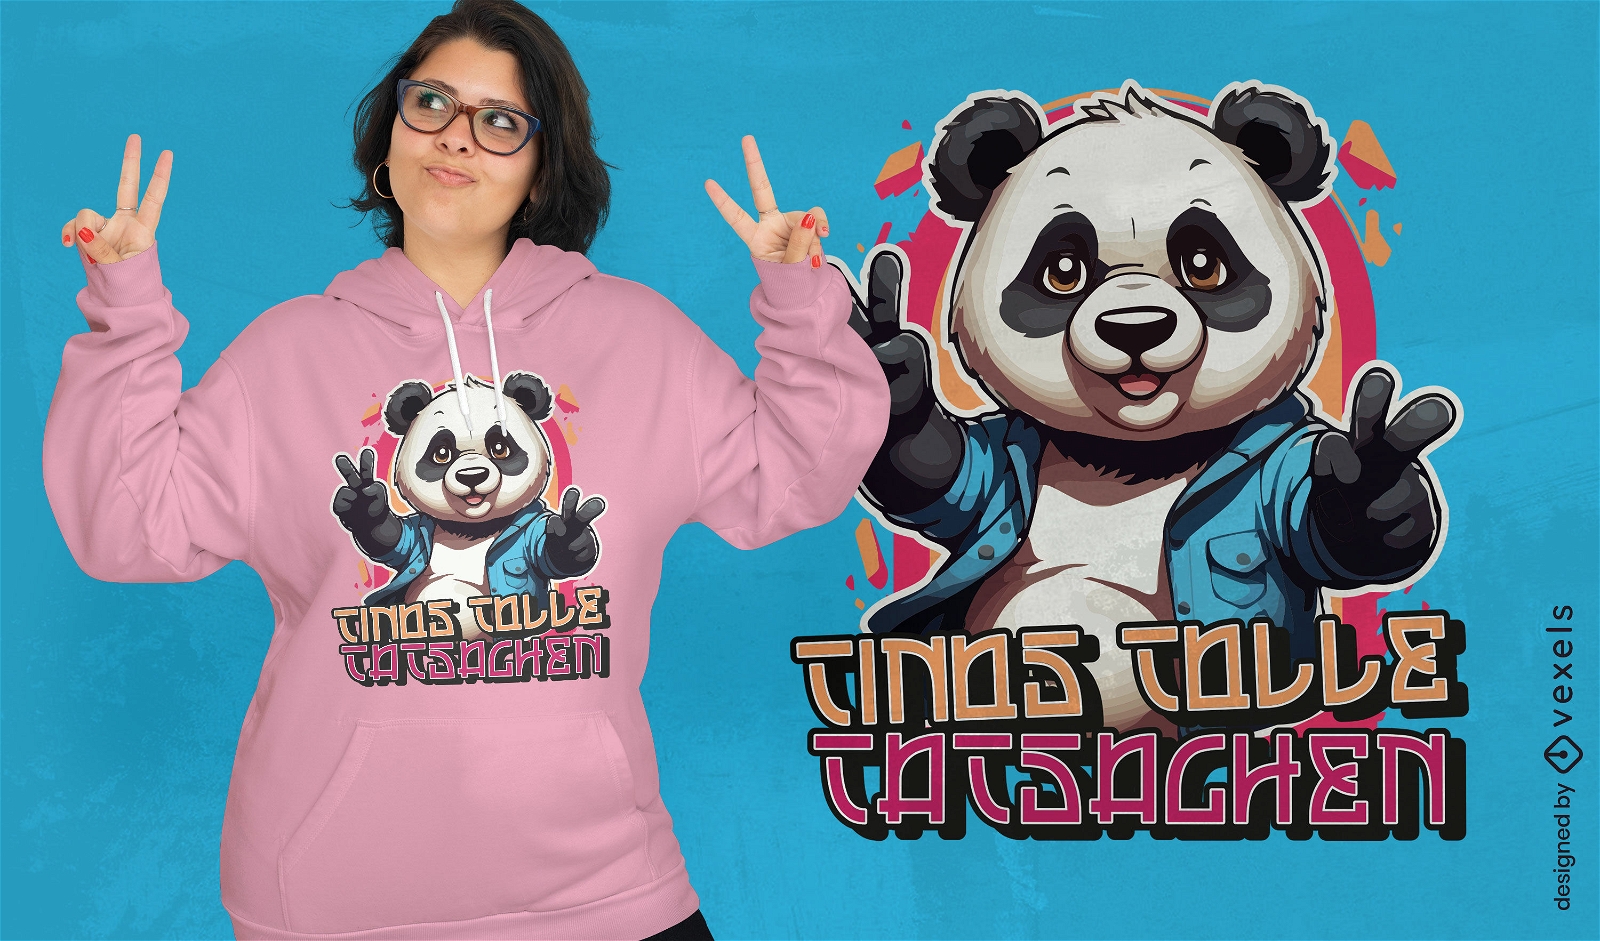 Panda character victory sign t-shirt design